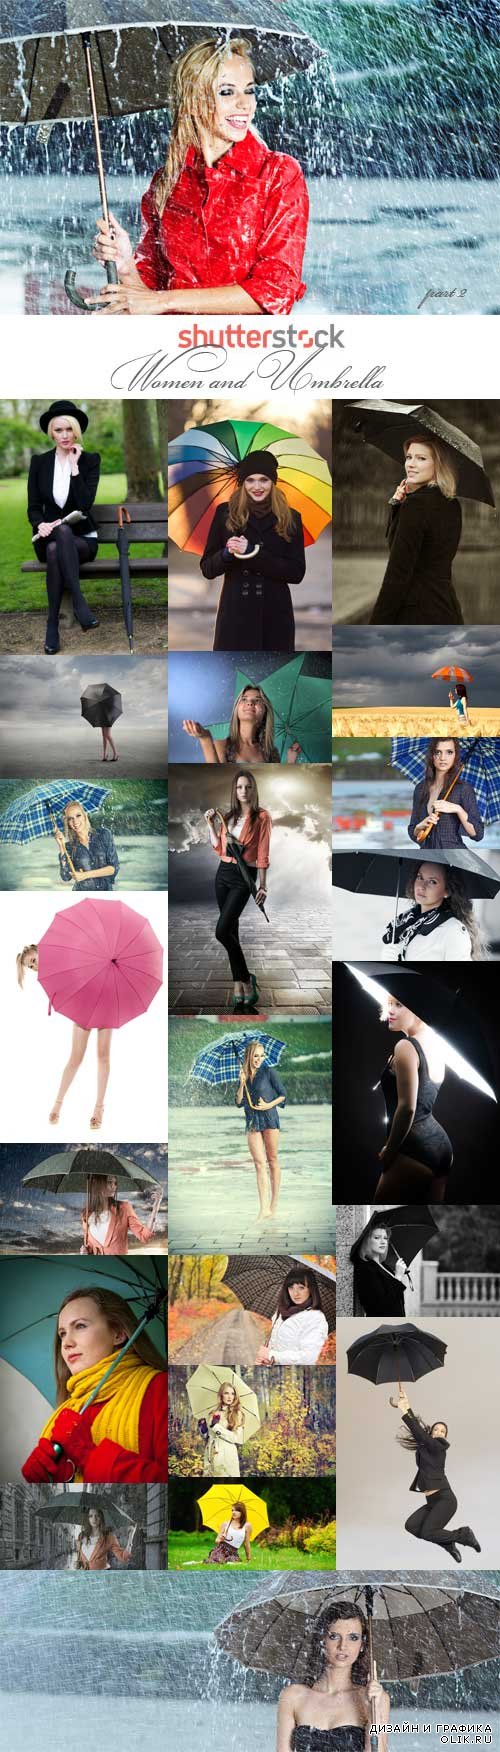 Women and Umbrella - 2